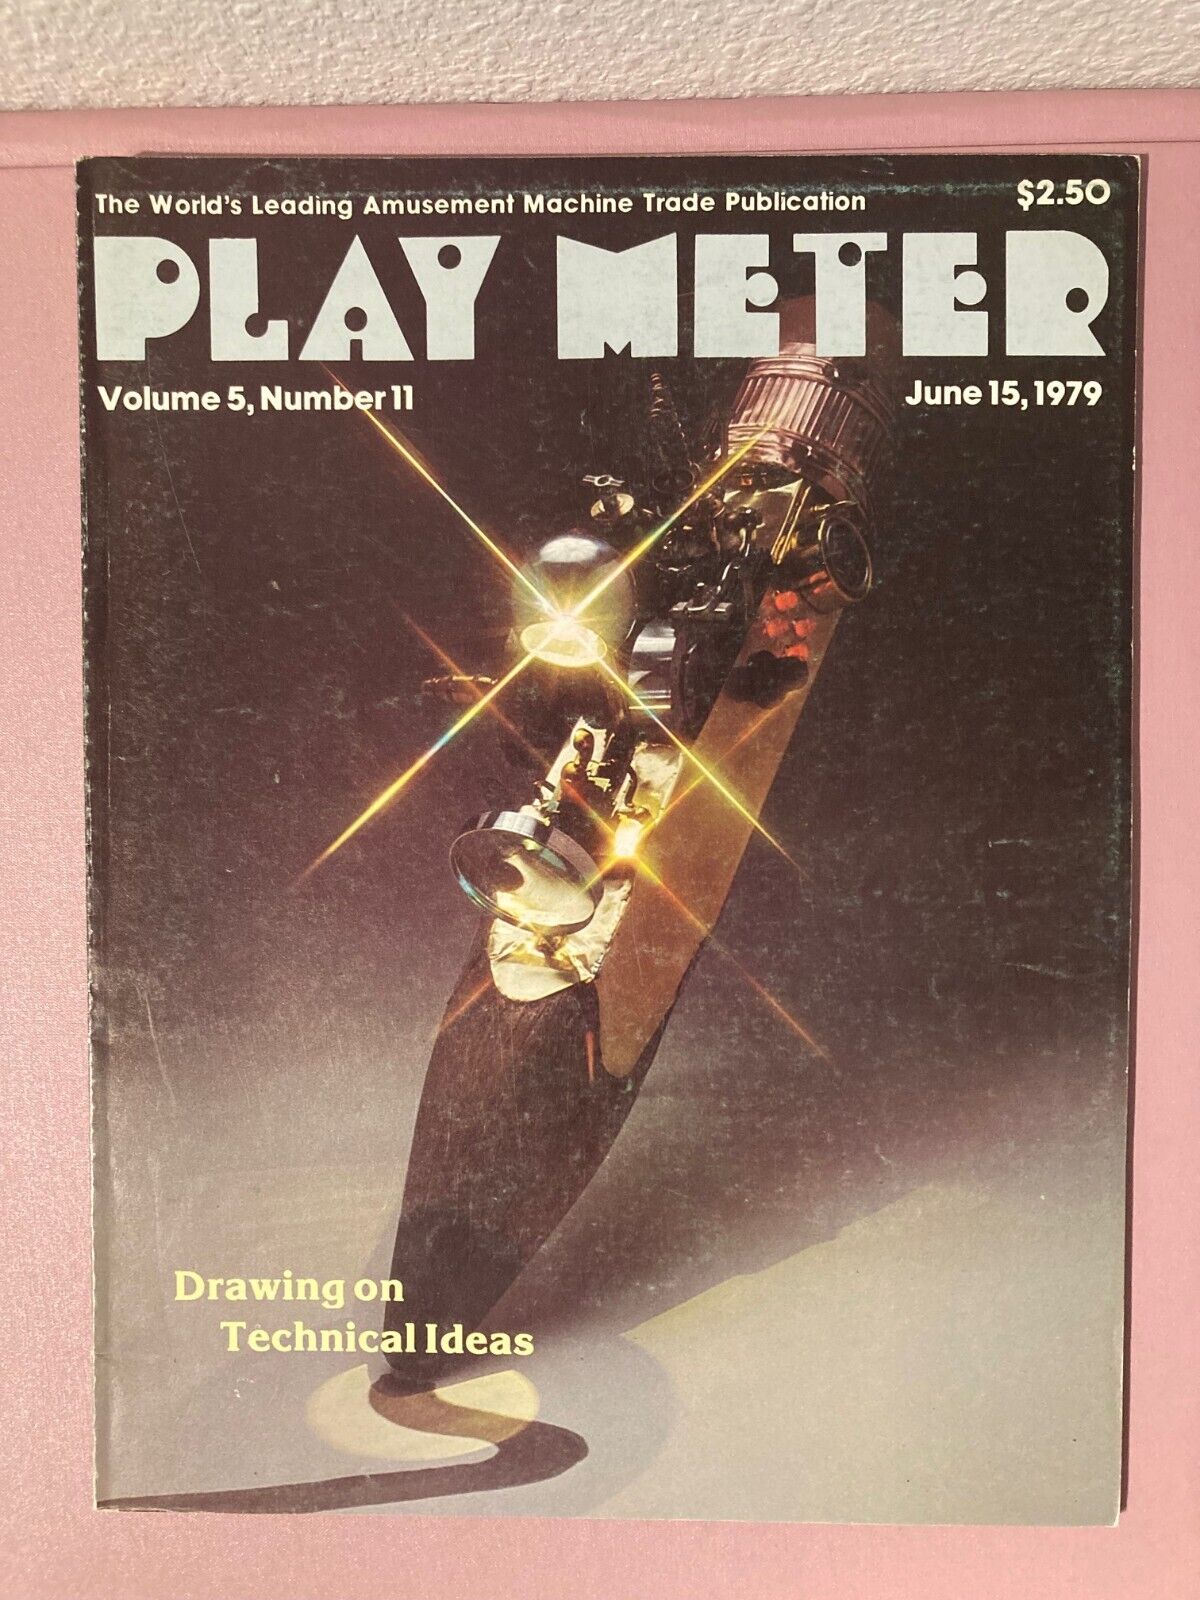 Play Meter Magazine June 15, 1979 Vol 5 No. 11  Arcade Video, Pinball, Flyers